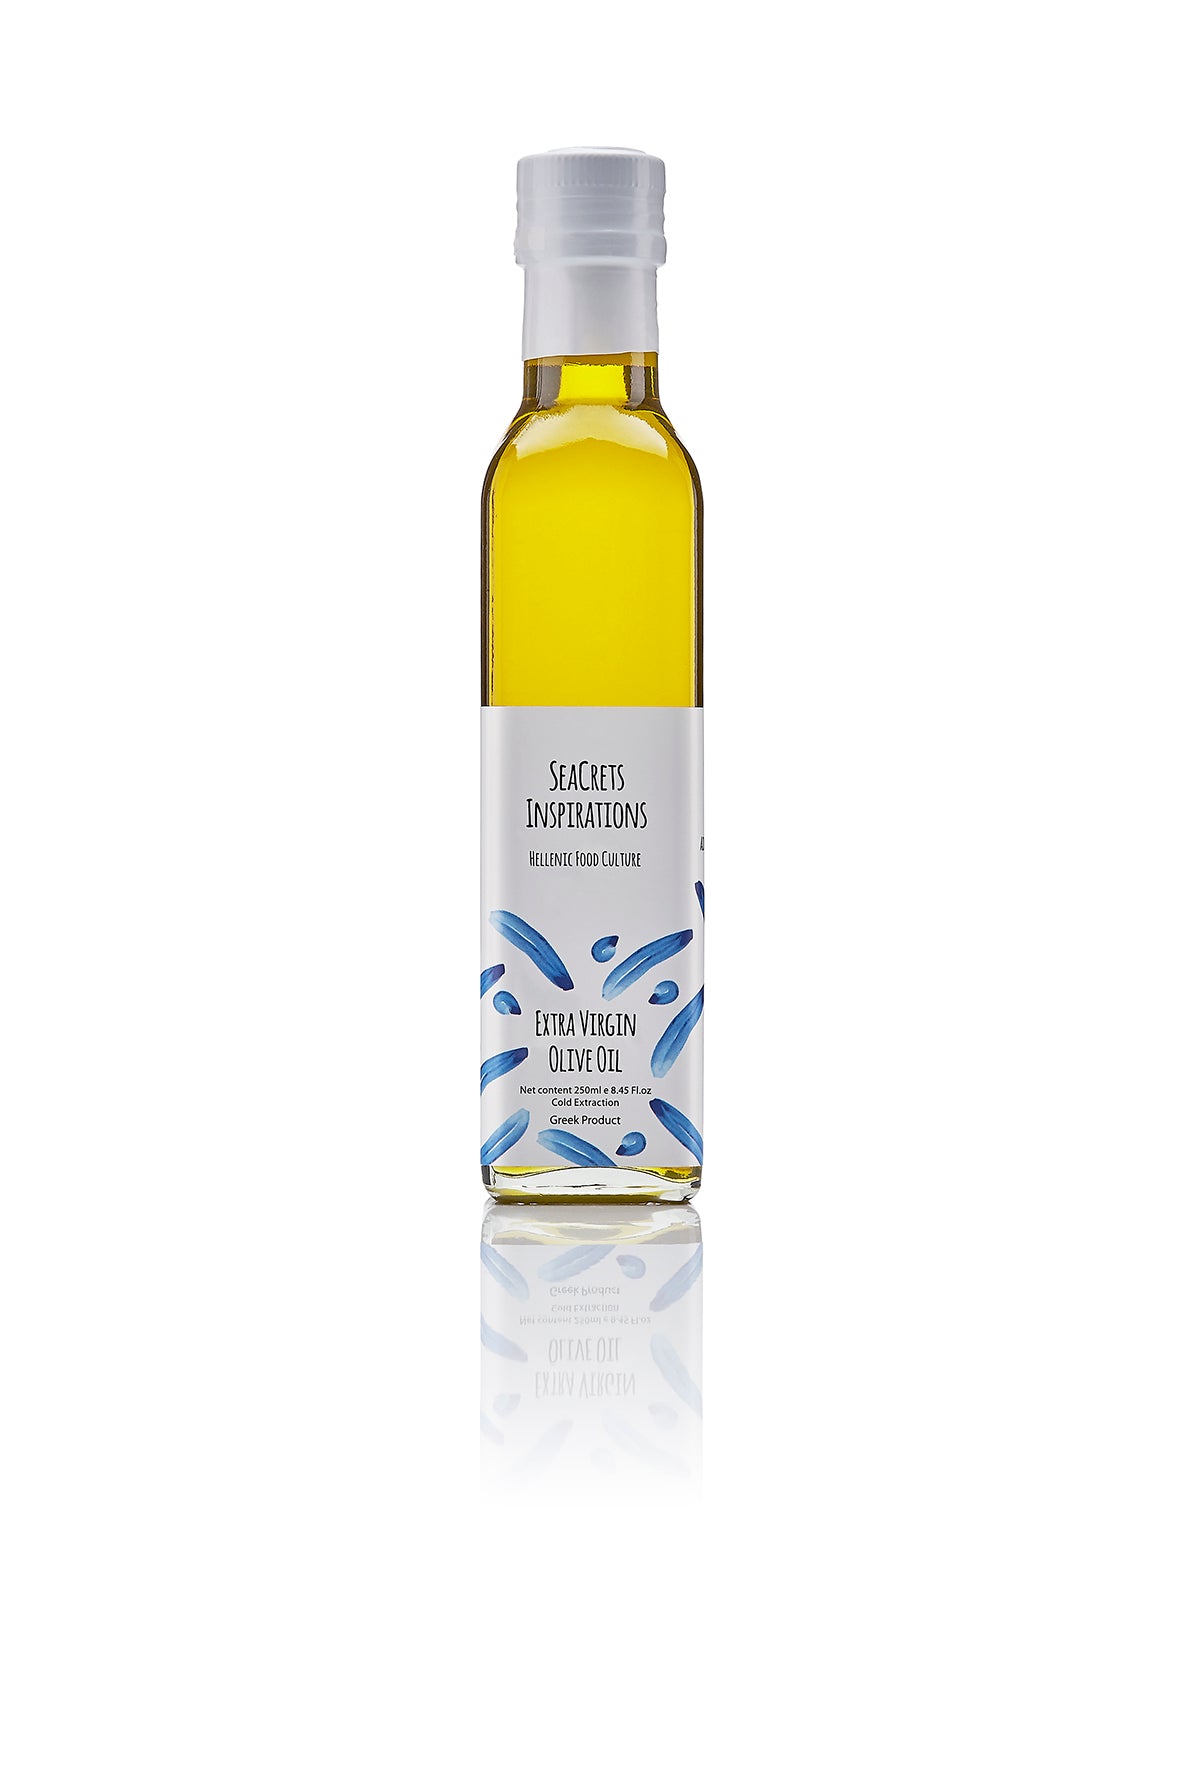 Seacrets Inspirations Extra Virgin Olive Oil 250ml